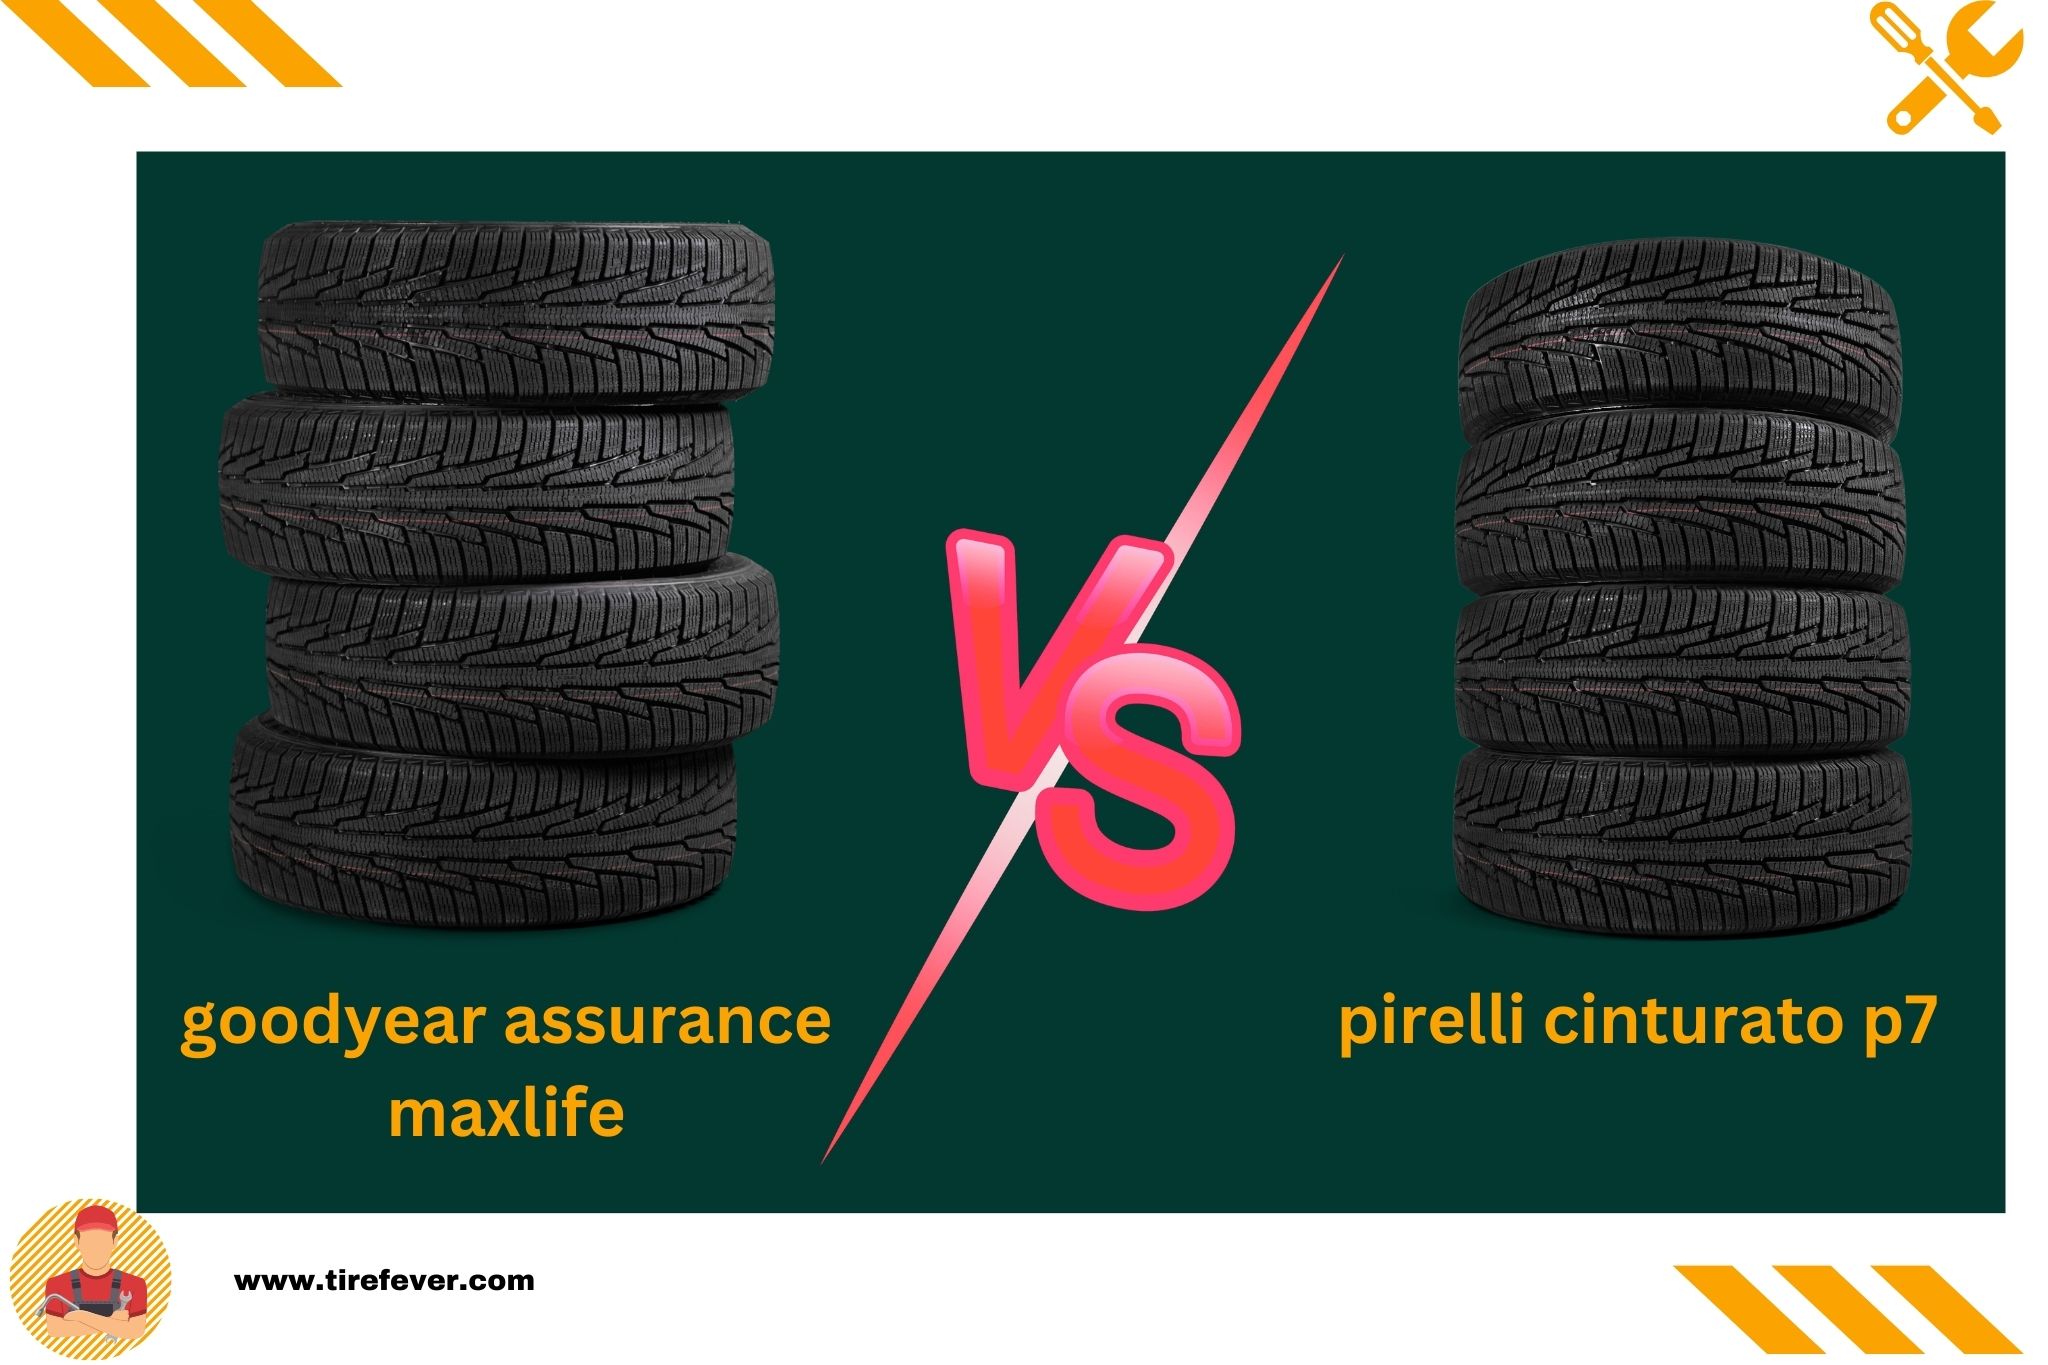 goodyear assurance maxlife vs pirelli cinturato p7